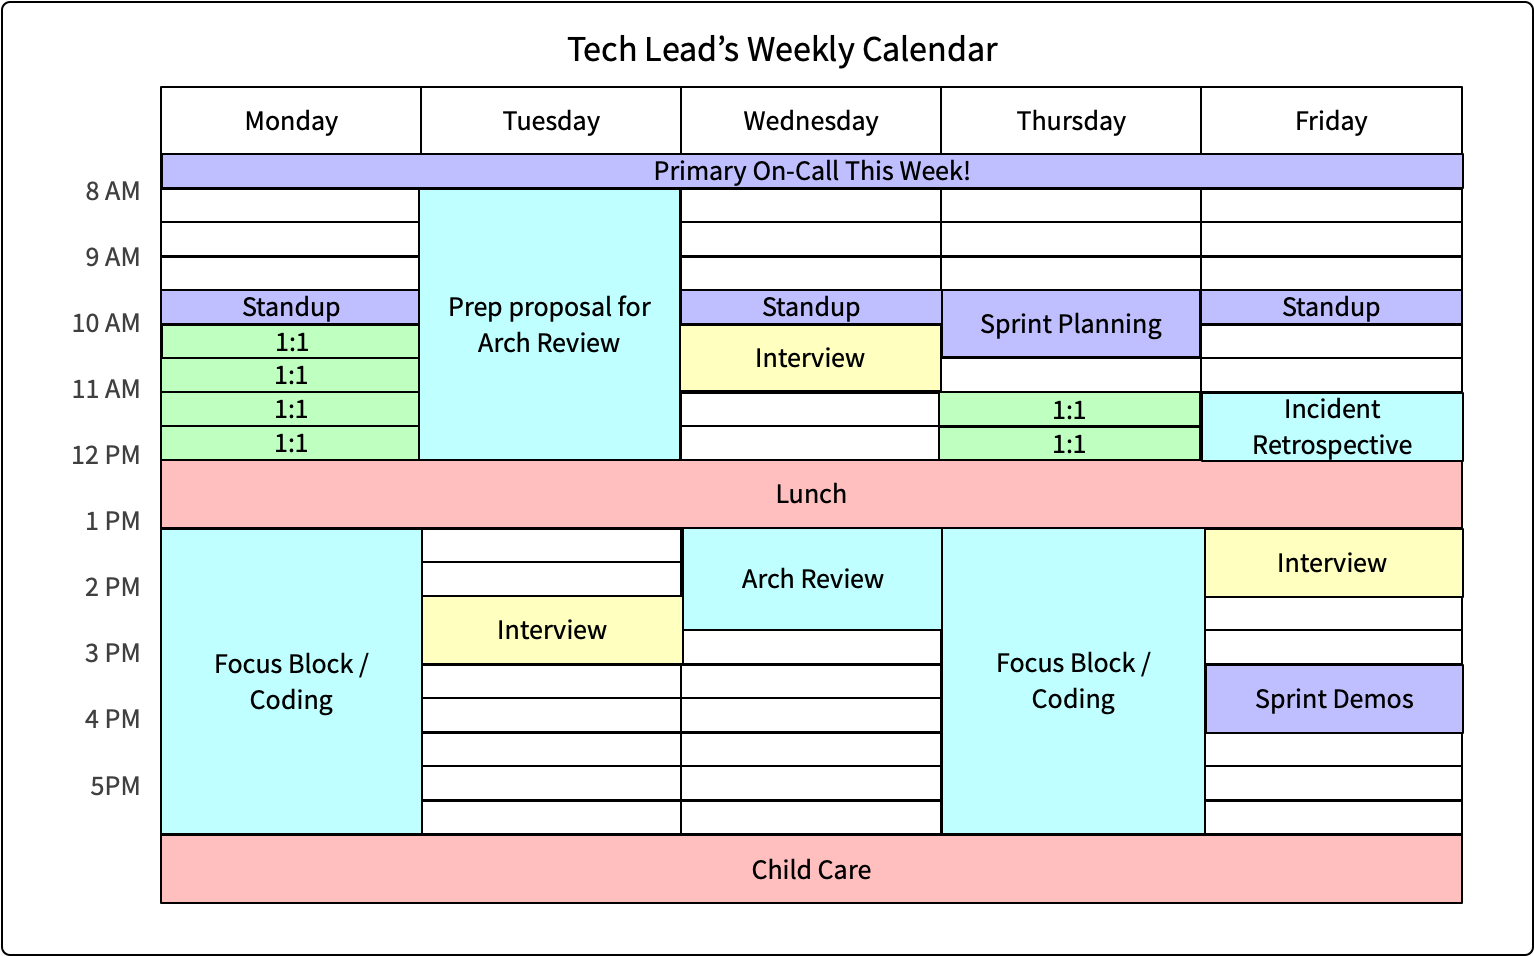 Example calendar for a Tech Lead archetype